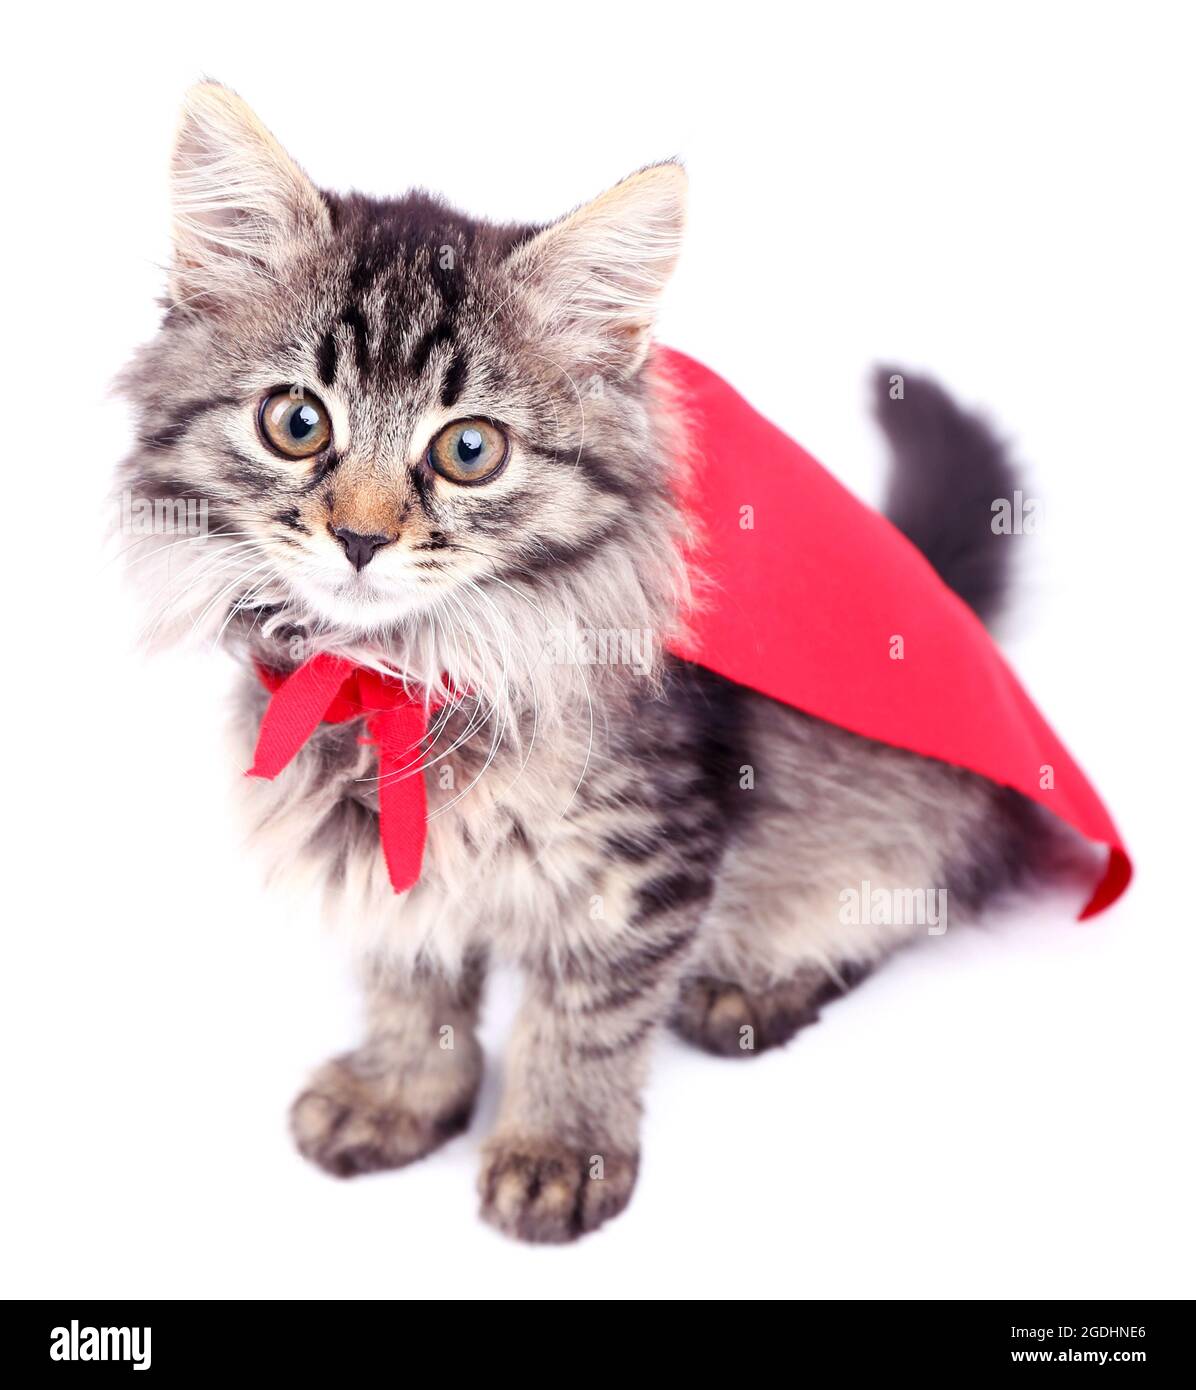 Katze in rotem Mantel, isoliert auf weiß Stockfotografie - Alamy